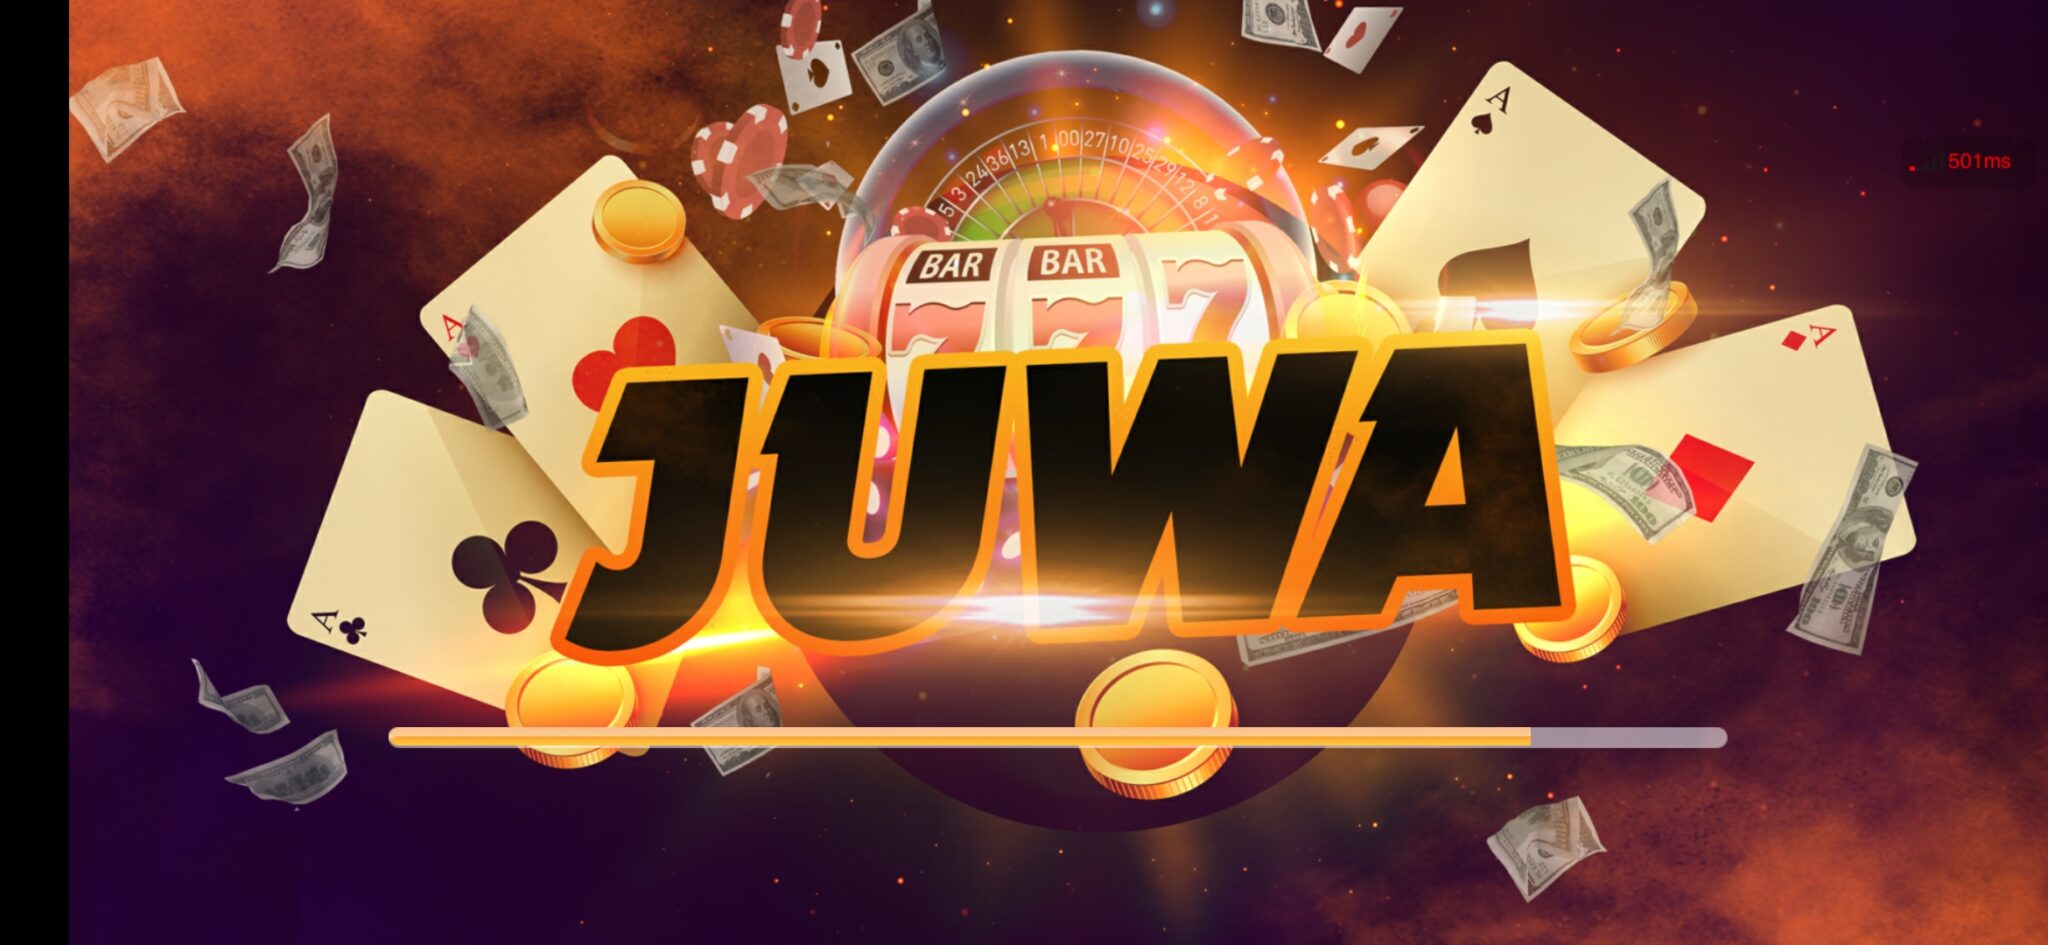 Juwa Login Casino Games Media